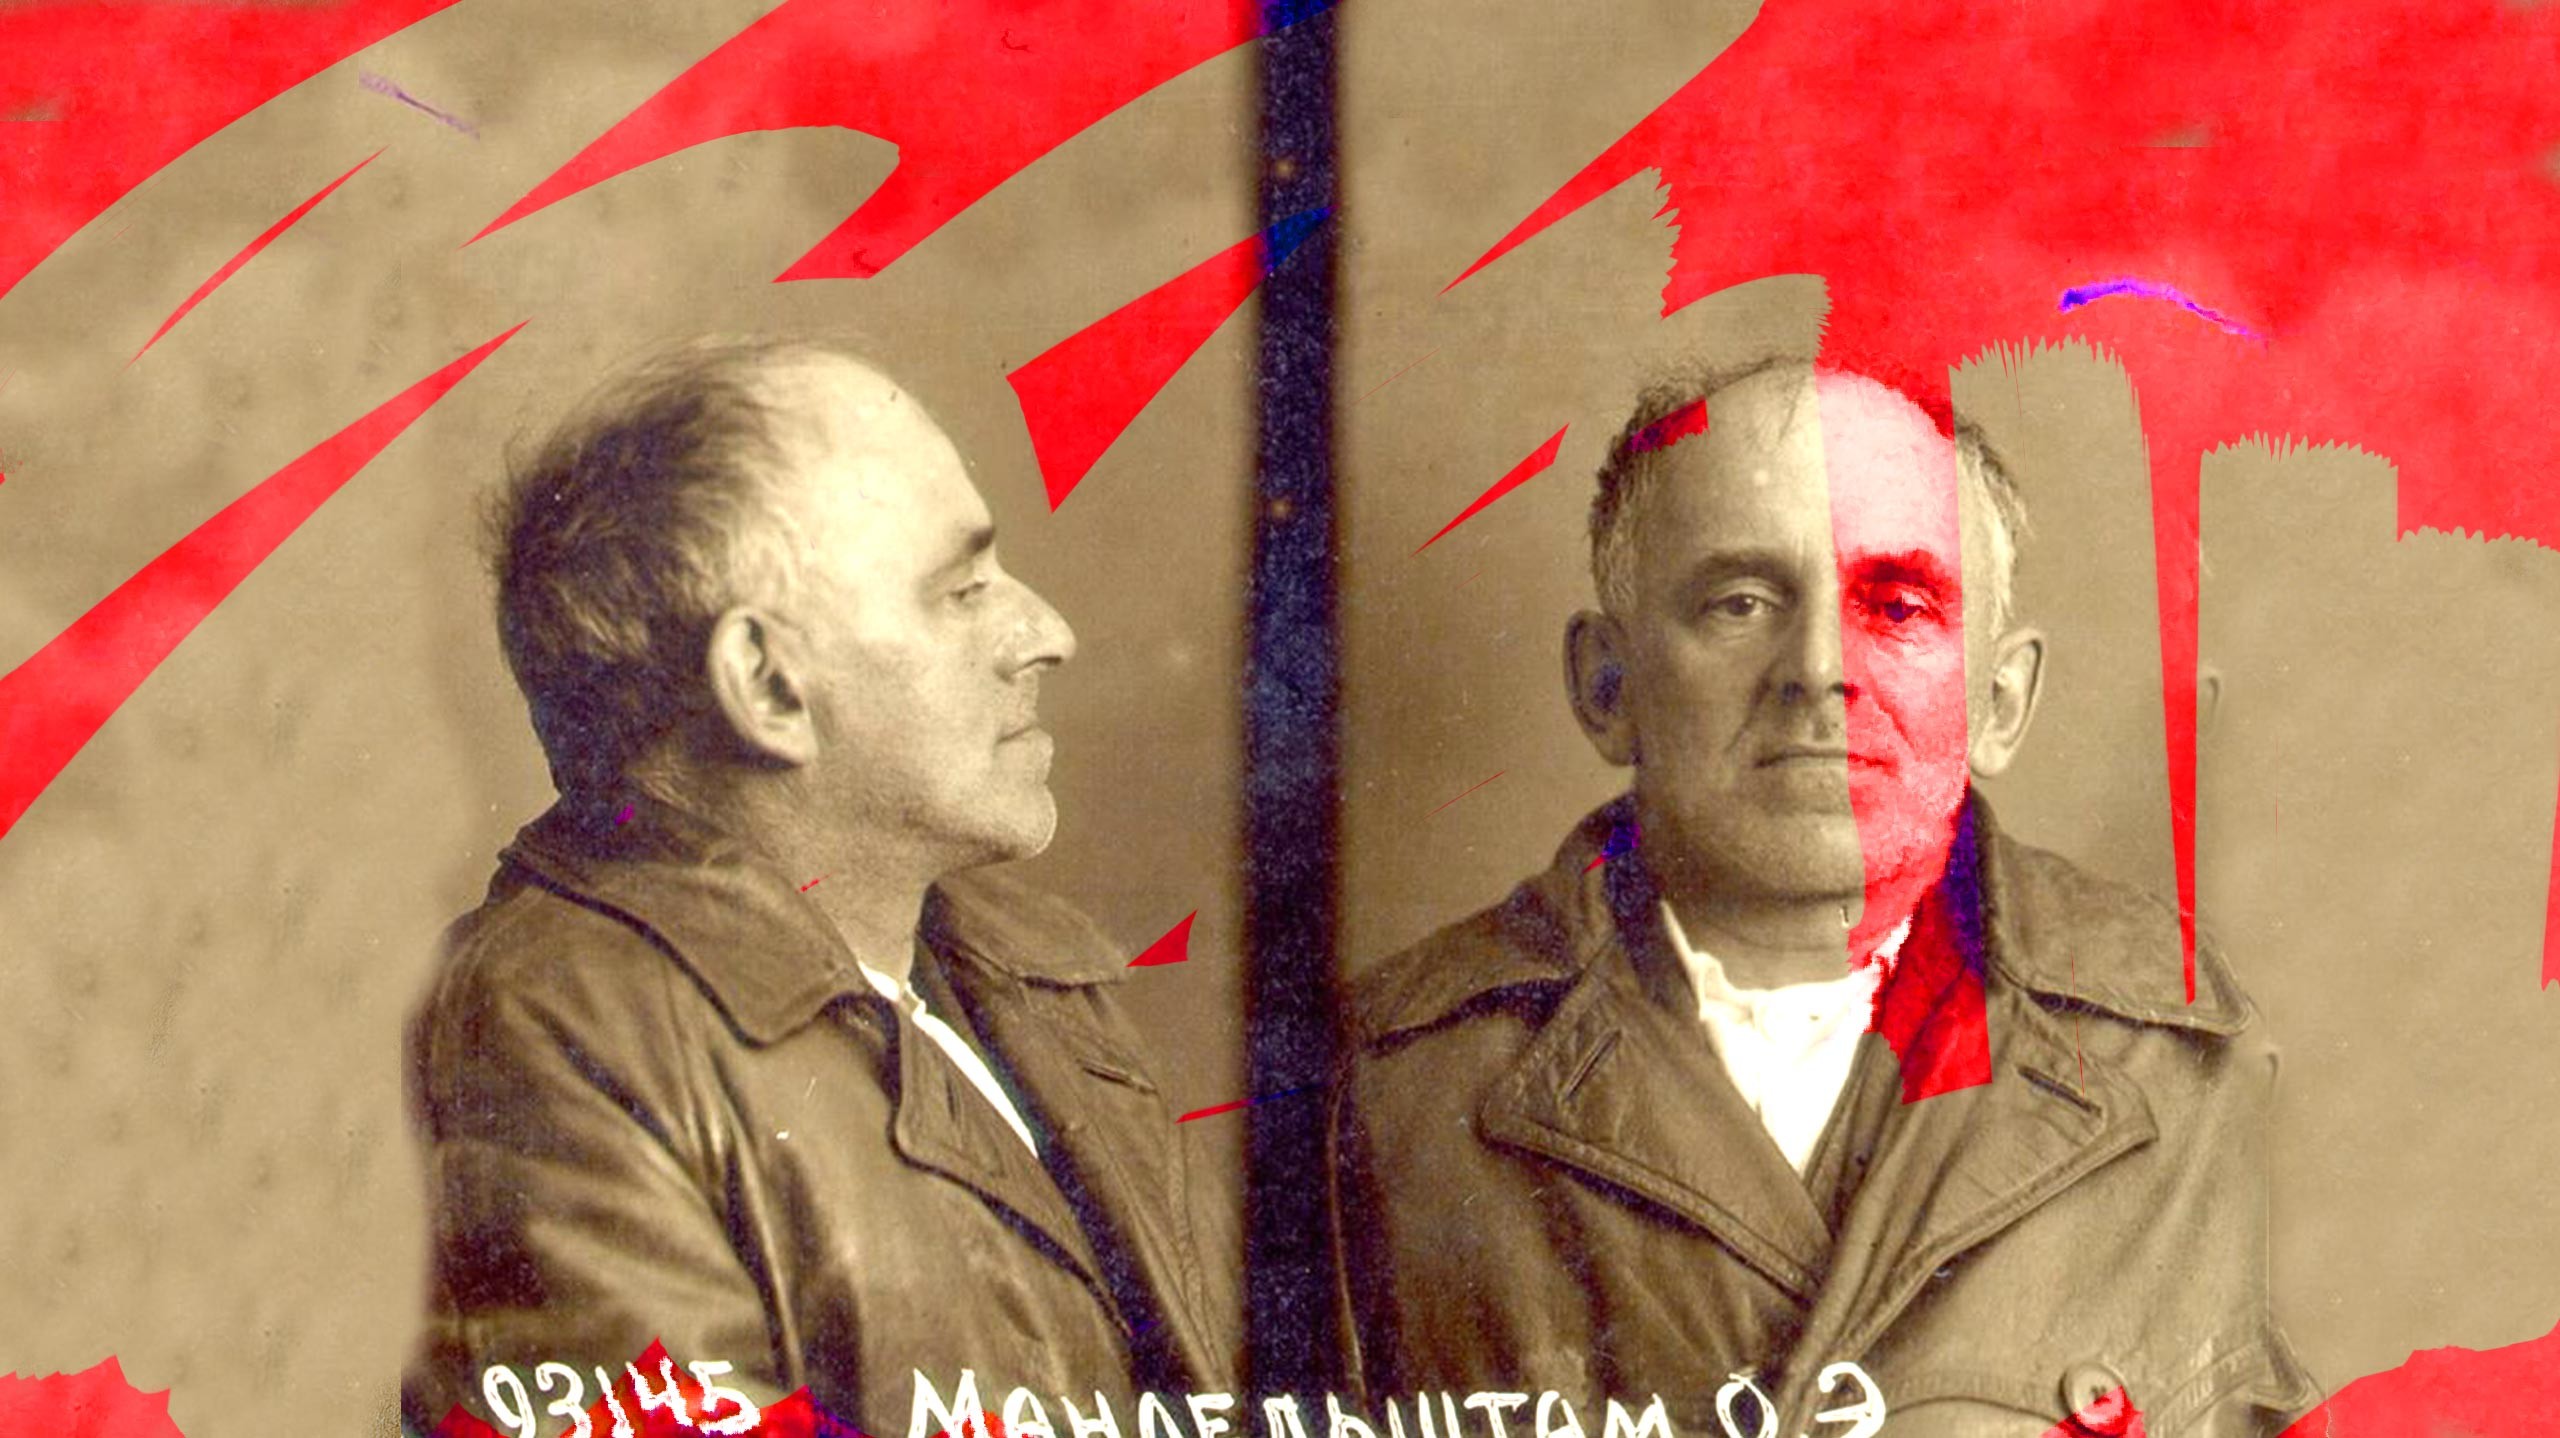 Мандельштам после ареста в 1938&nbsp;г. Фото: &copy;&nbsp;wikipedia.org